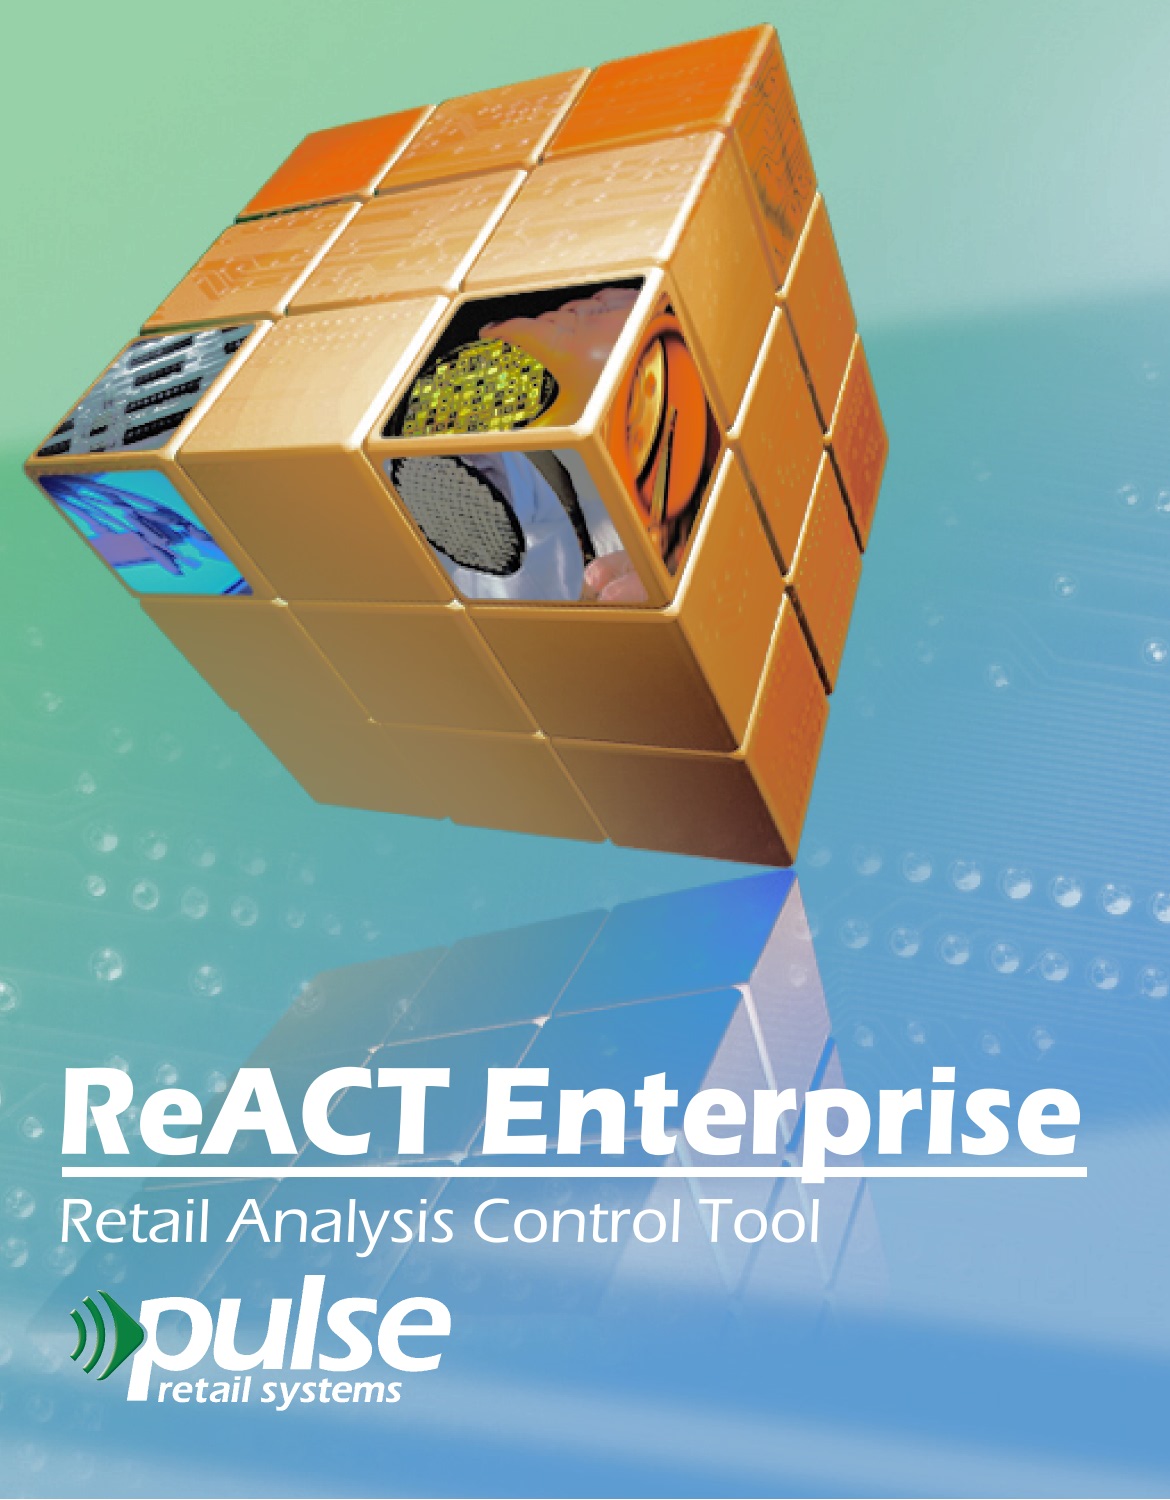 Pulse Retail Systems - ReACT Enterprise